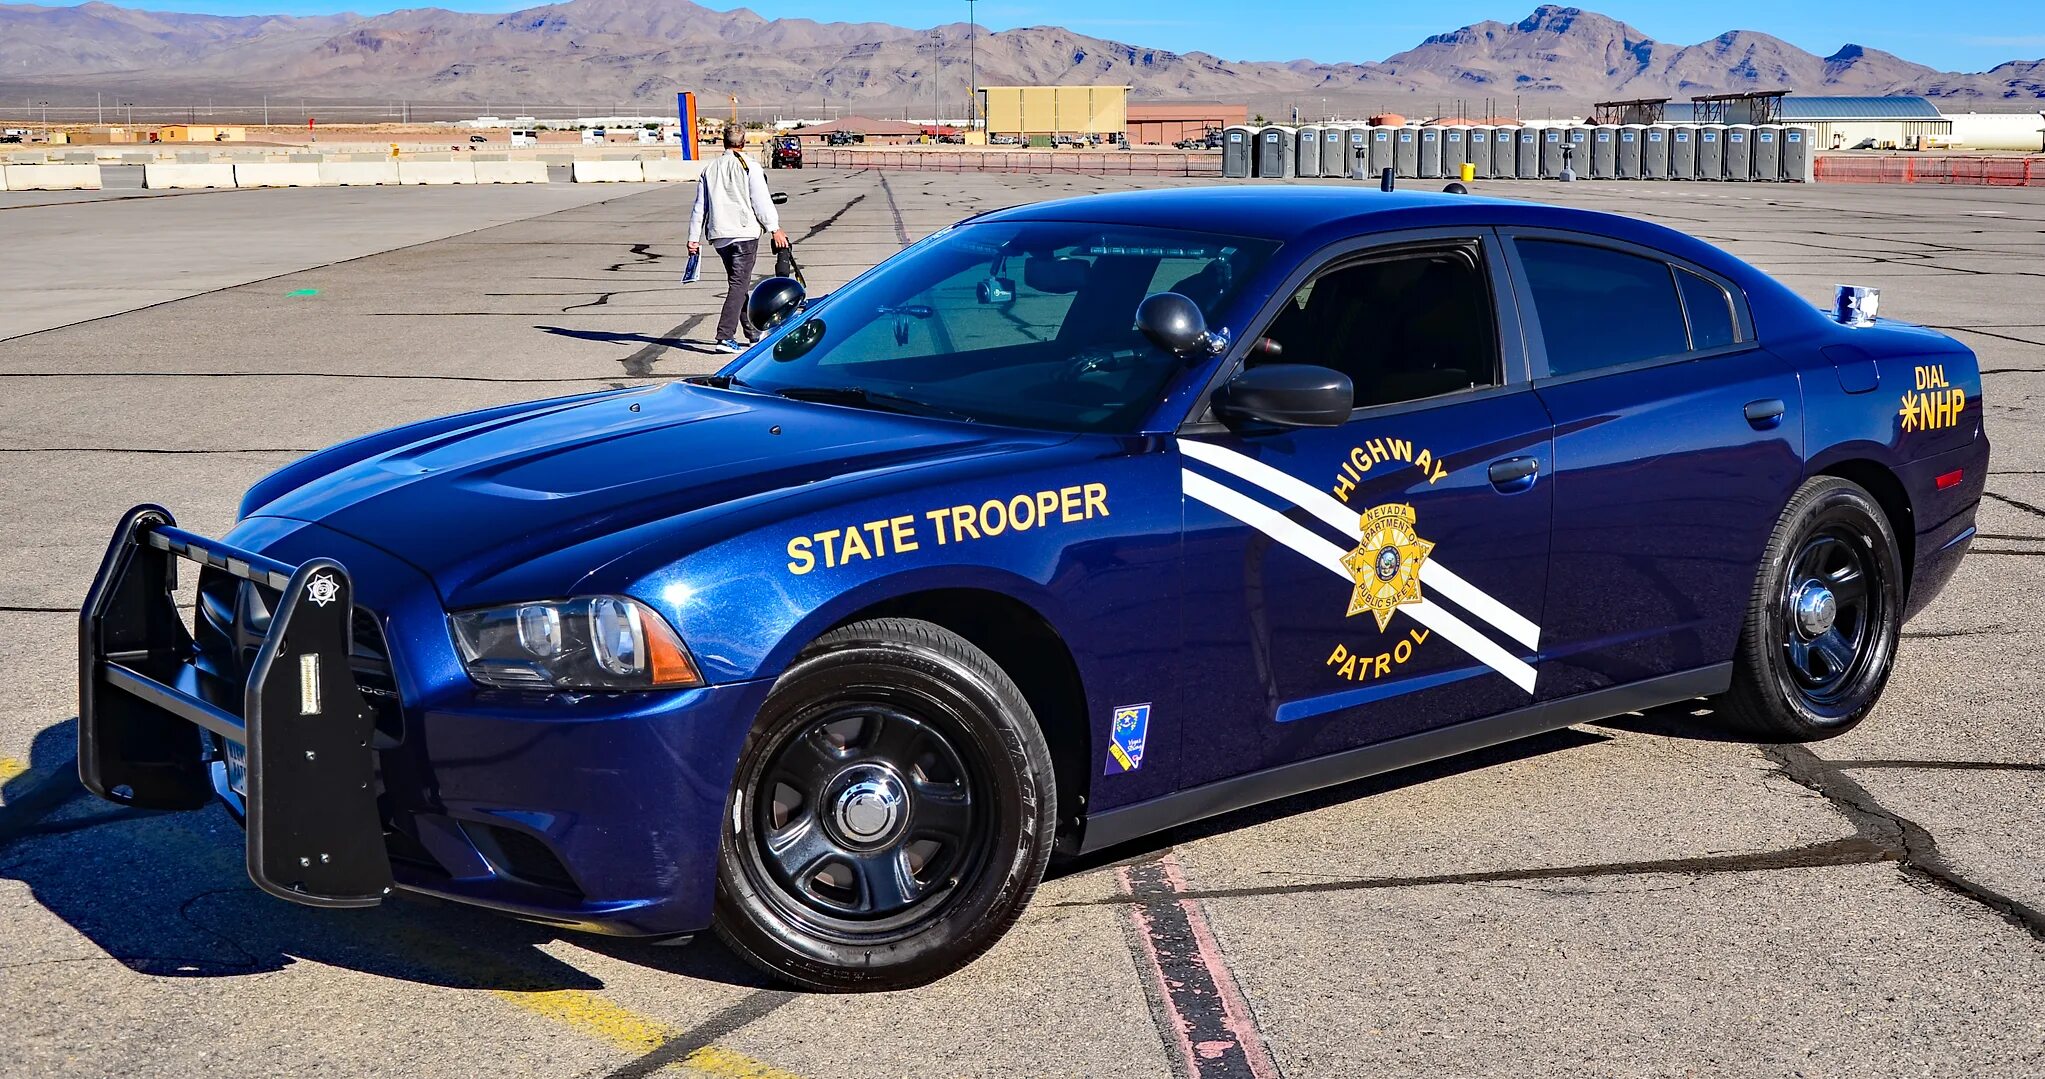 Nevada Highway Patrol. Dodge Charger Highway Patrol. Nevada Highway Patrol State Trooper. Полицейский Додж Чарджер.